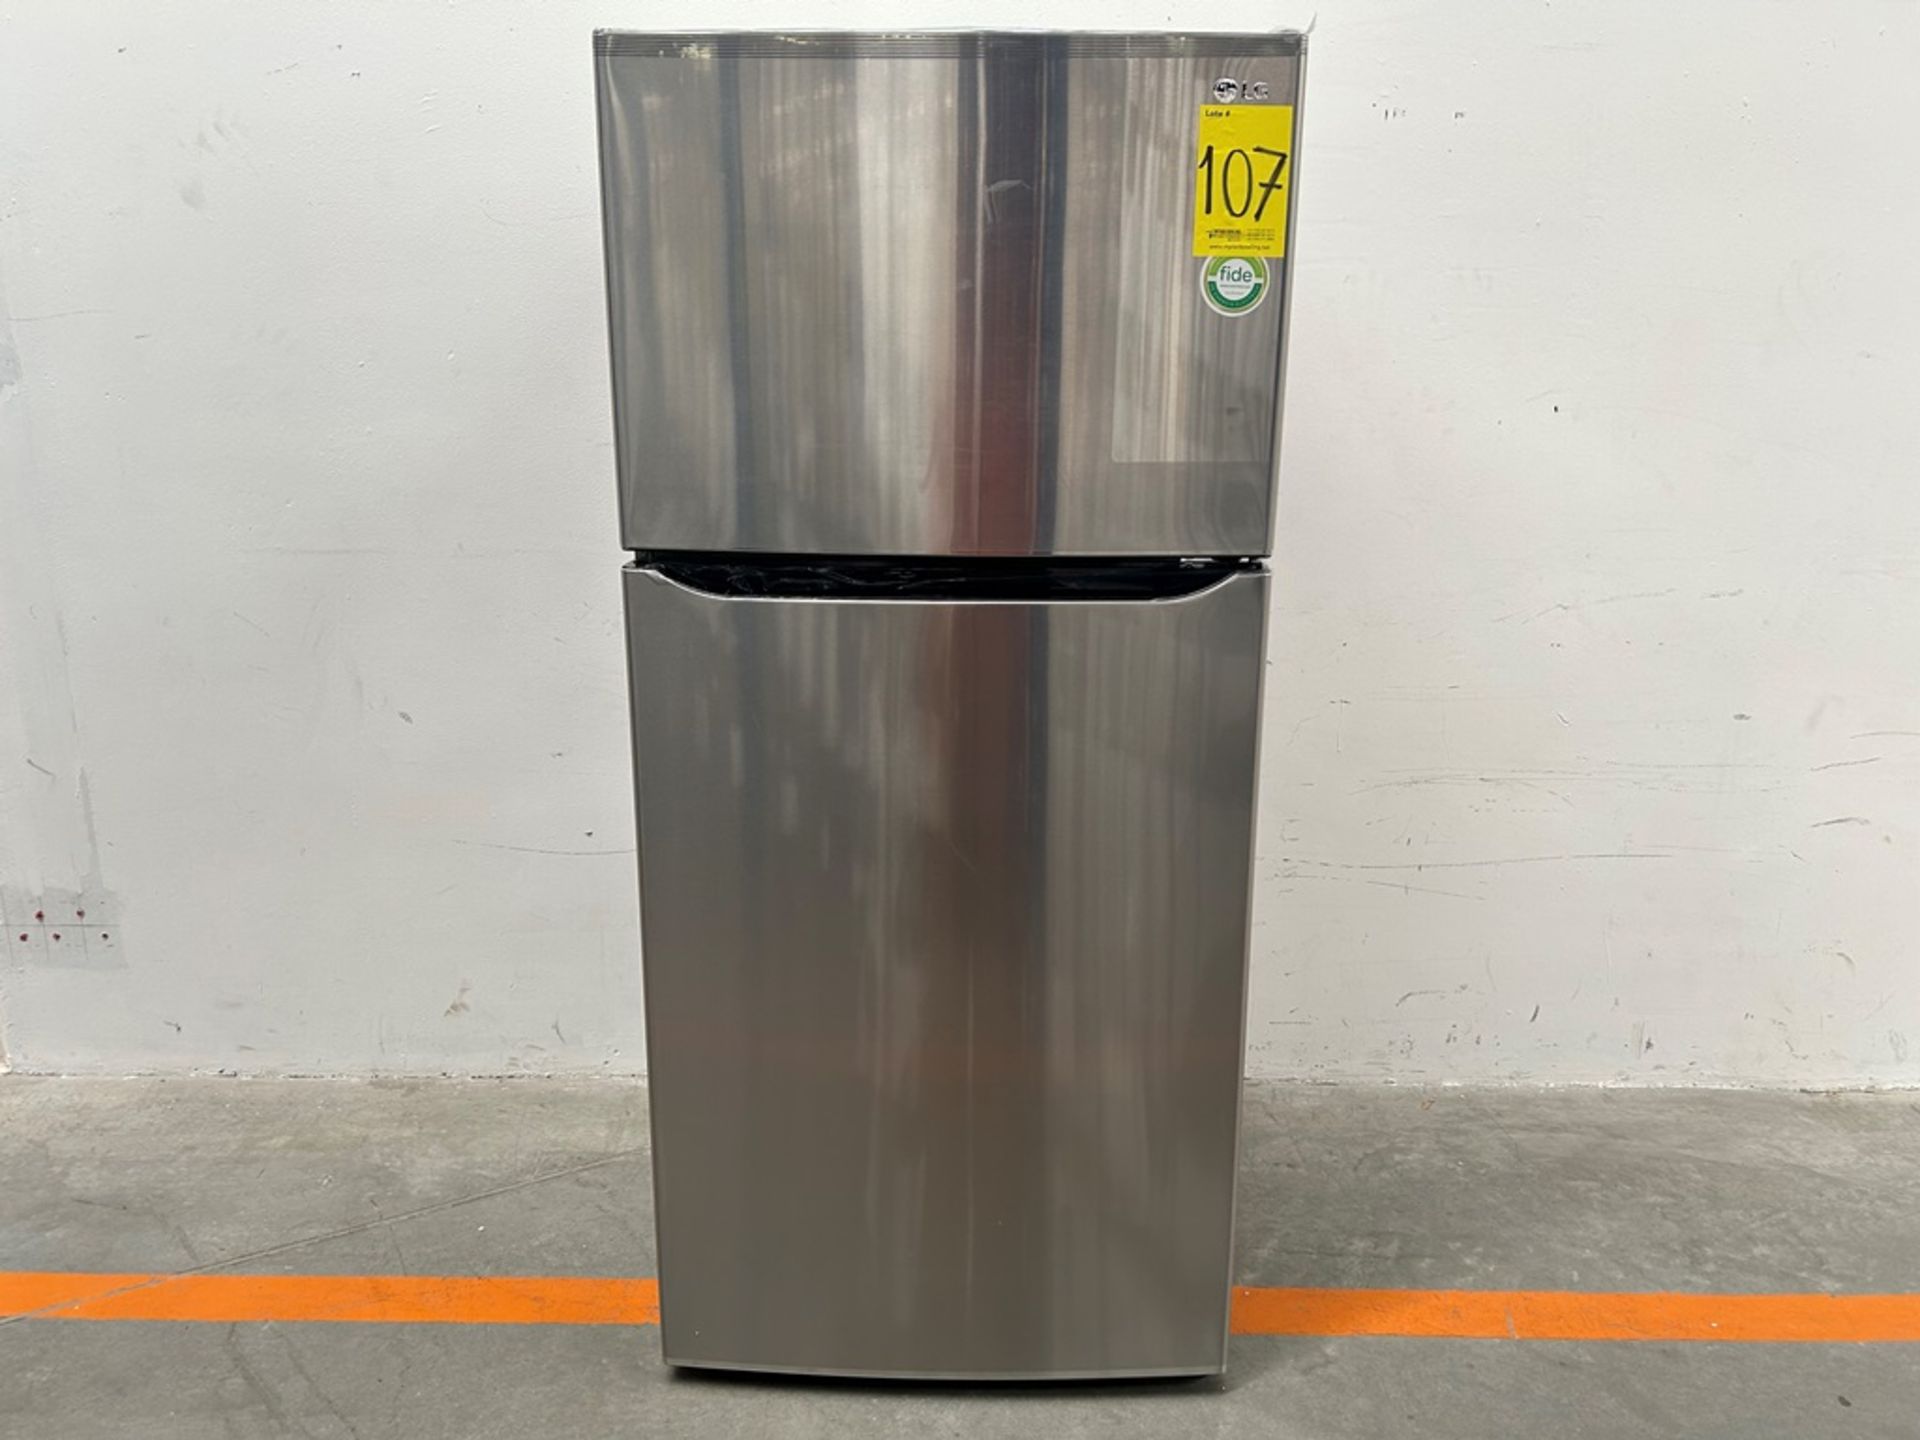 (NUEVO) Refrigerador Marca LG, Modelo LT57BPSX, Serie 1N322, Color GRIS (Golpe leve frontal, Favor